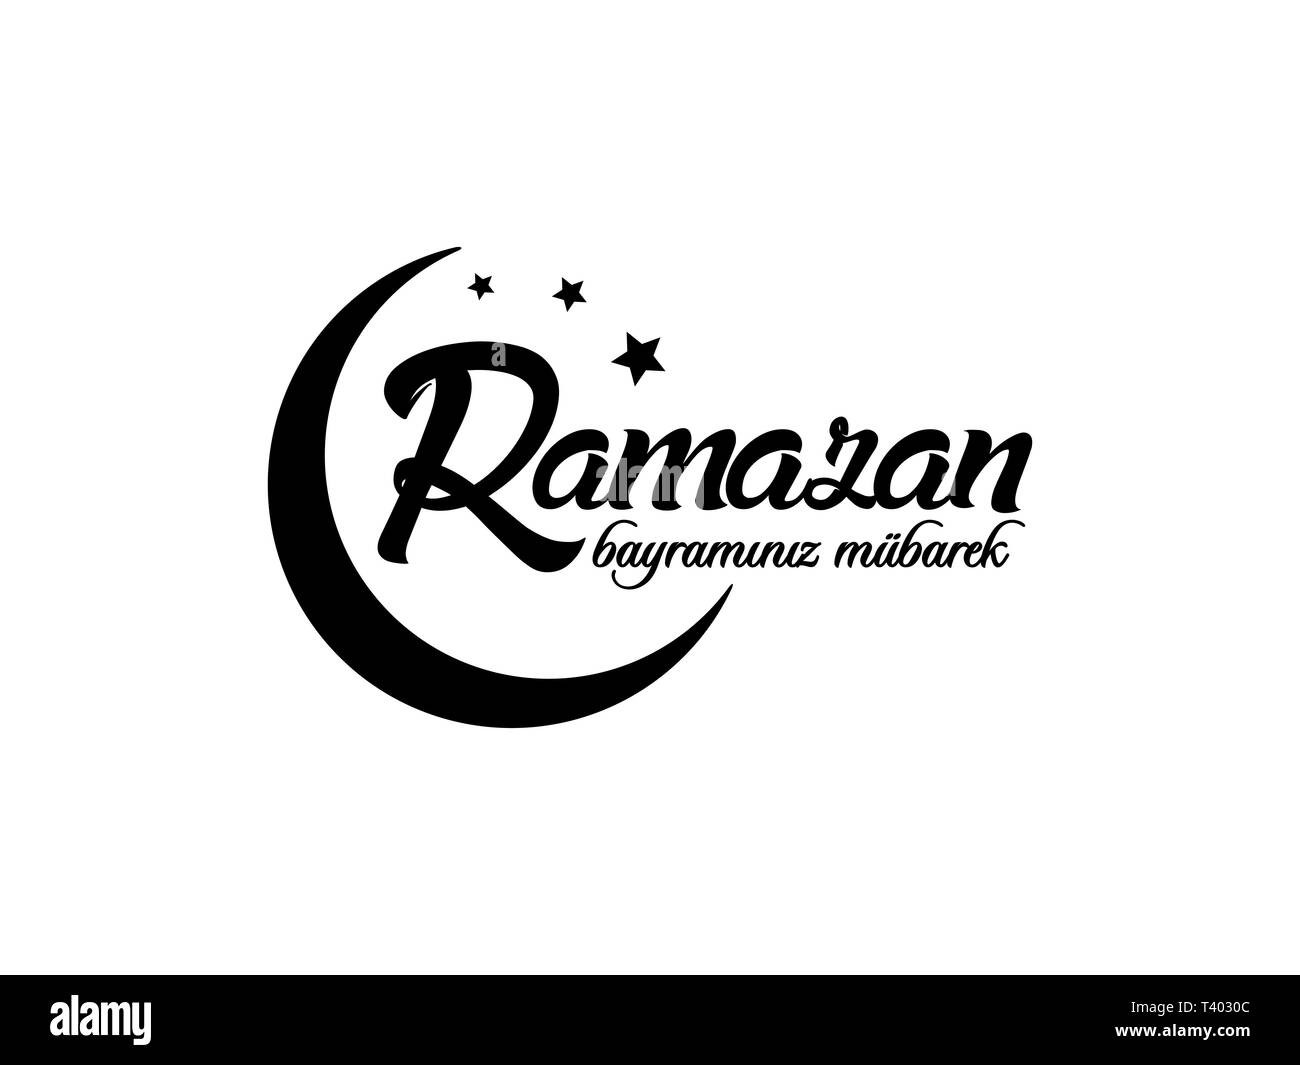 Ramazan bayraminiz mubarek olsun. Traduzione dal turco: Happy Ramadan. Illustrazione Vettoriale